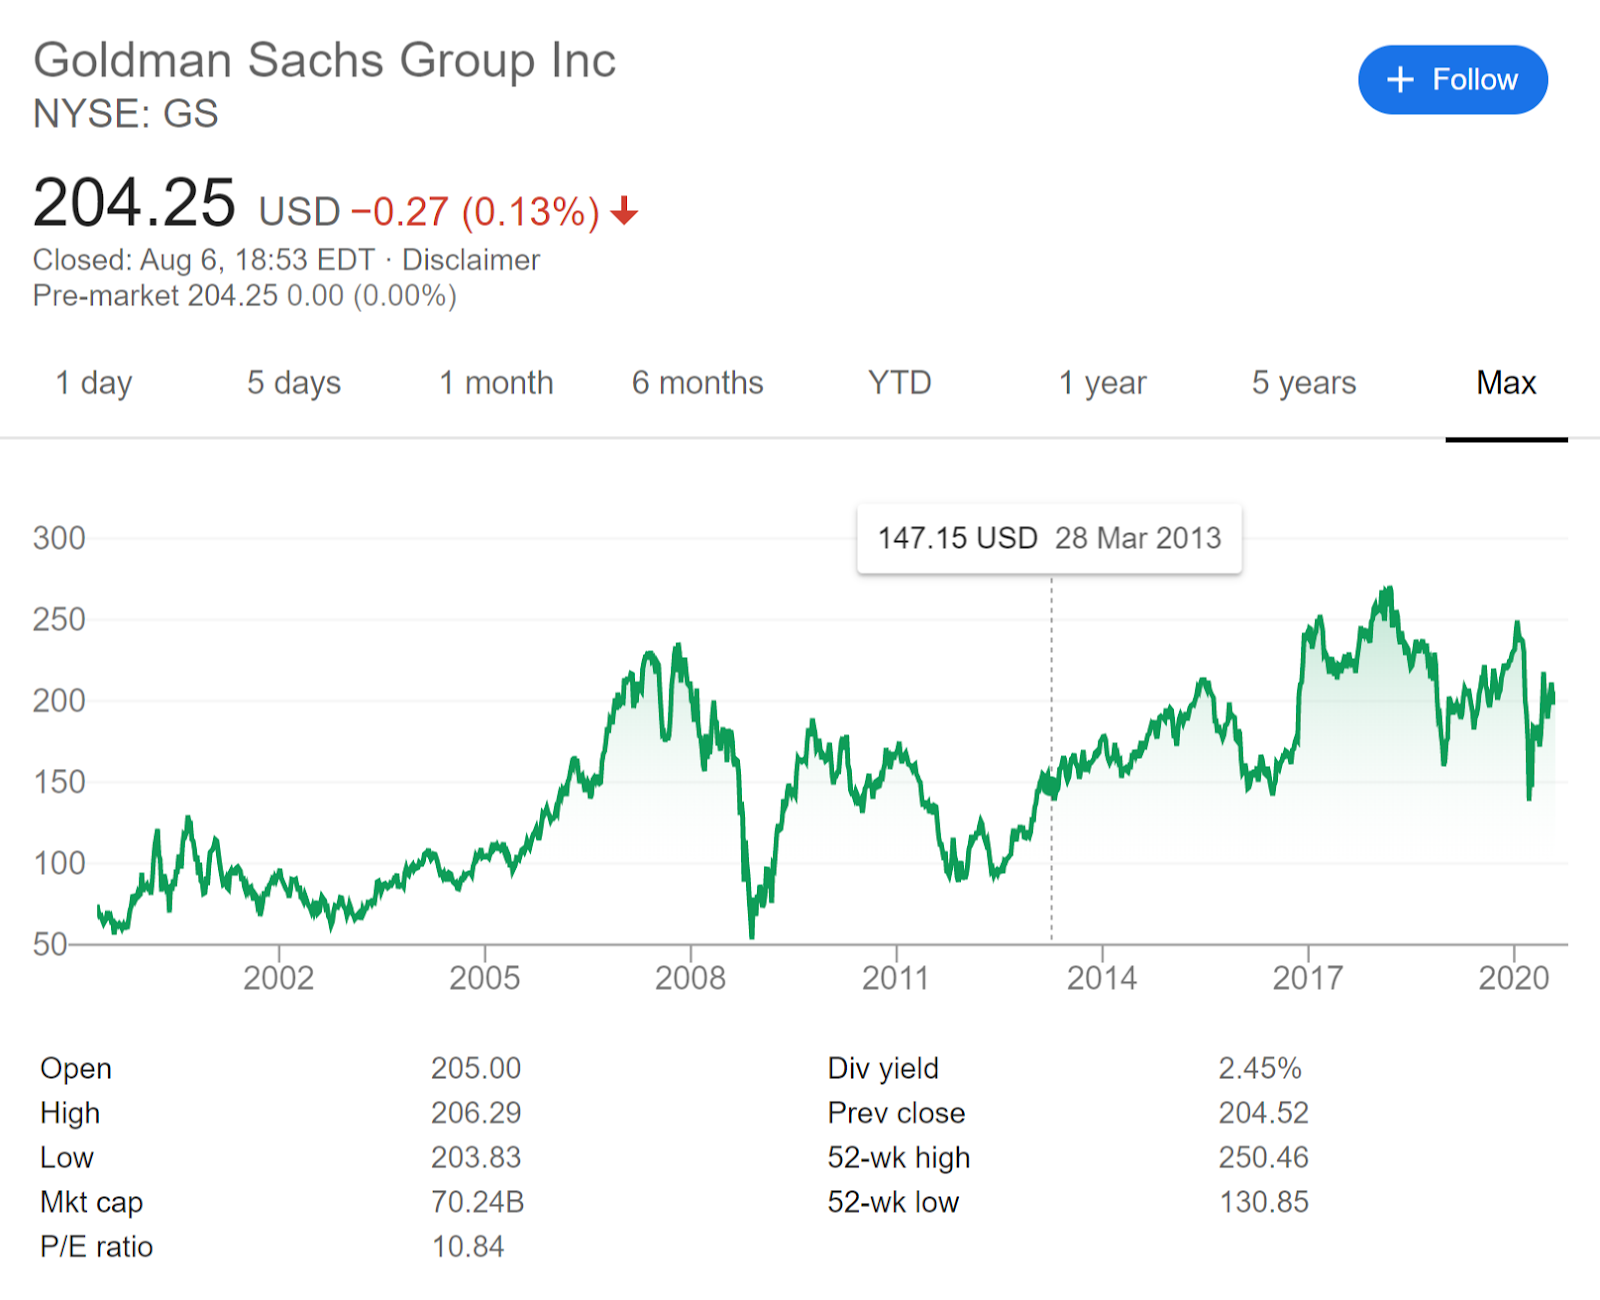 Grafik yang menggambarkan harga saham jangka panjang Goldman Sachs Group Inc. Sumber: Google